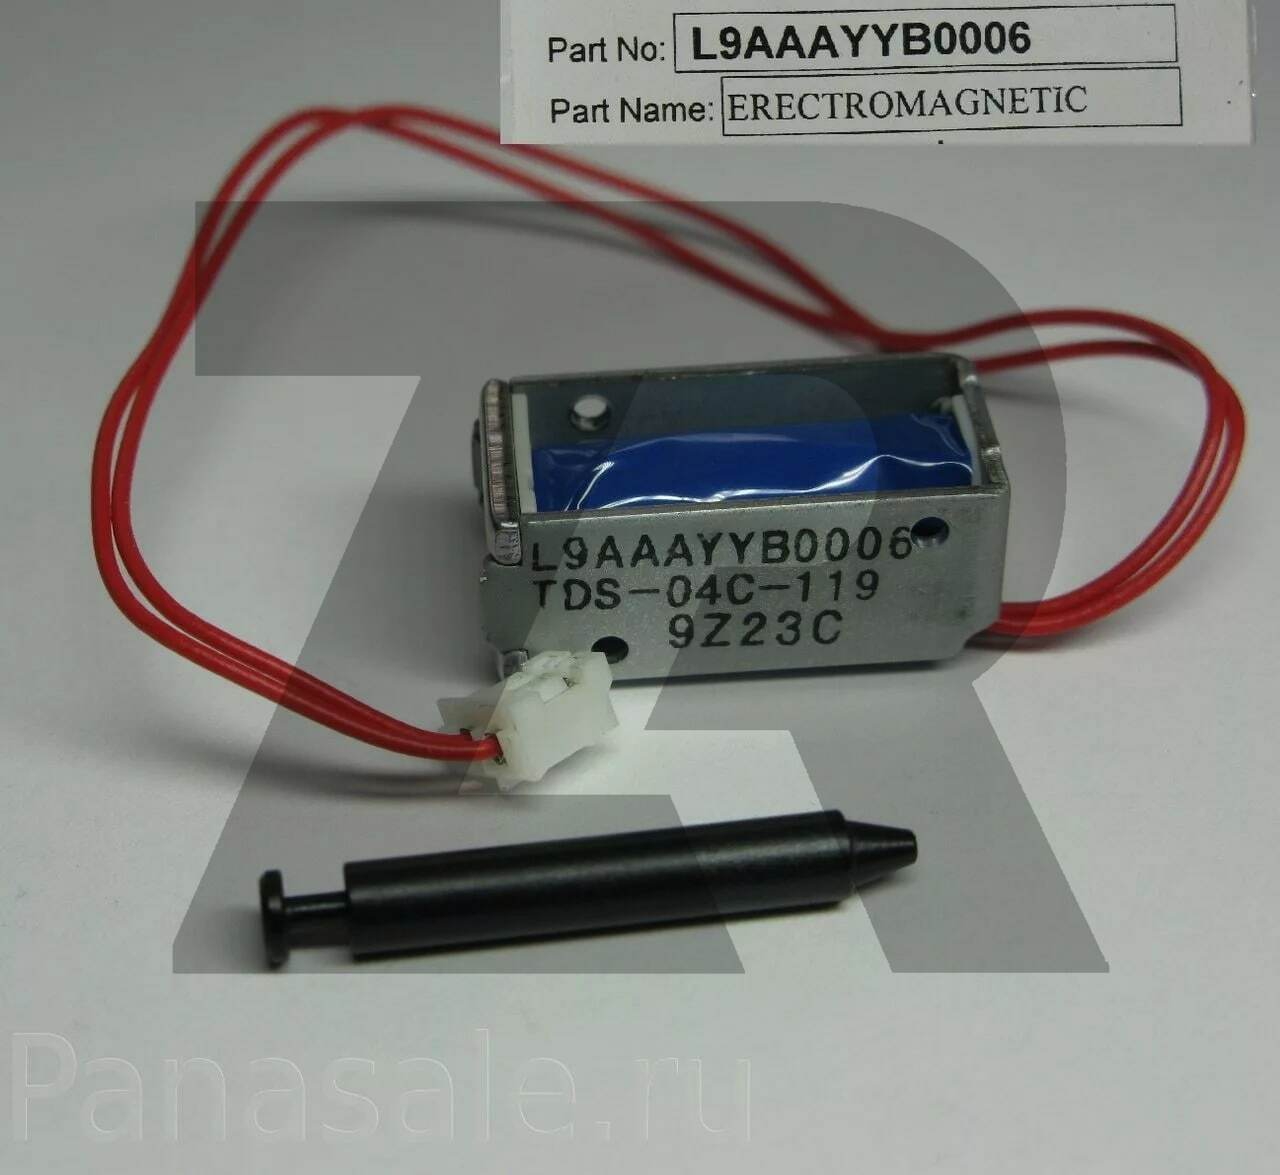 Электромагнитный (соленоид редуктора) переключатель Panasonic™ KX-MB263/763/1900, L9AAAYYB0006, OEM